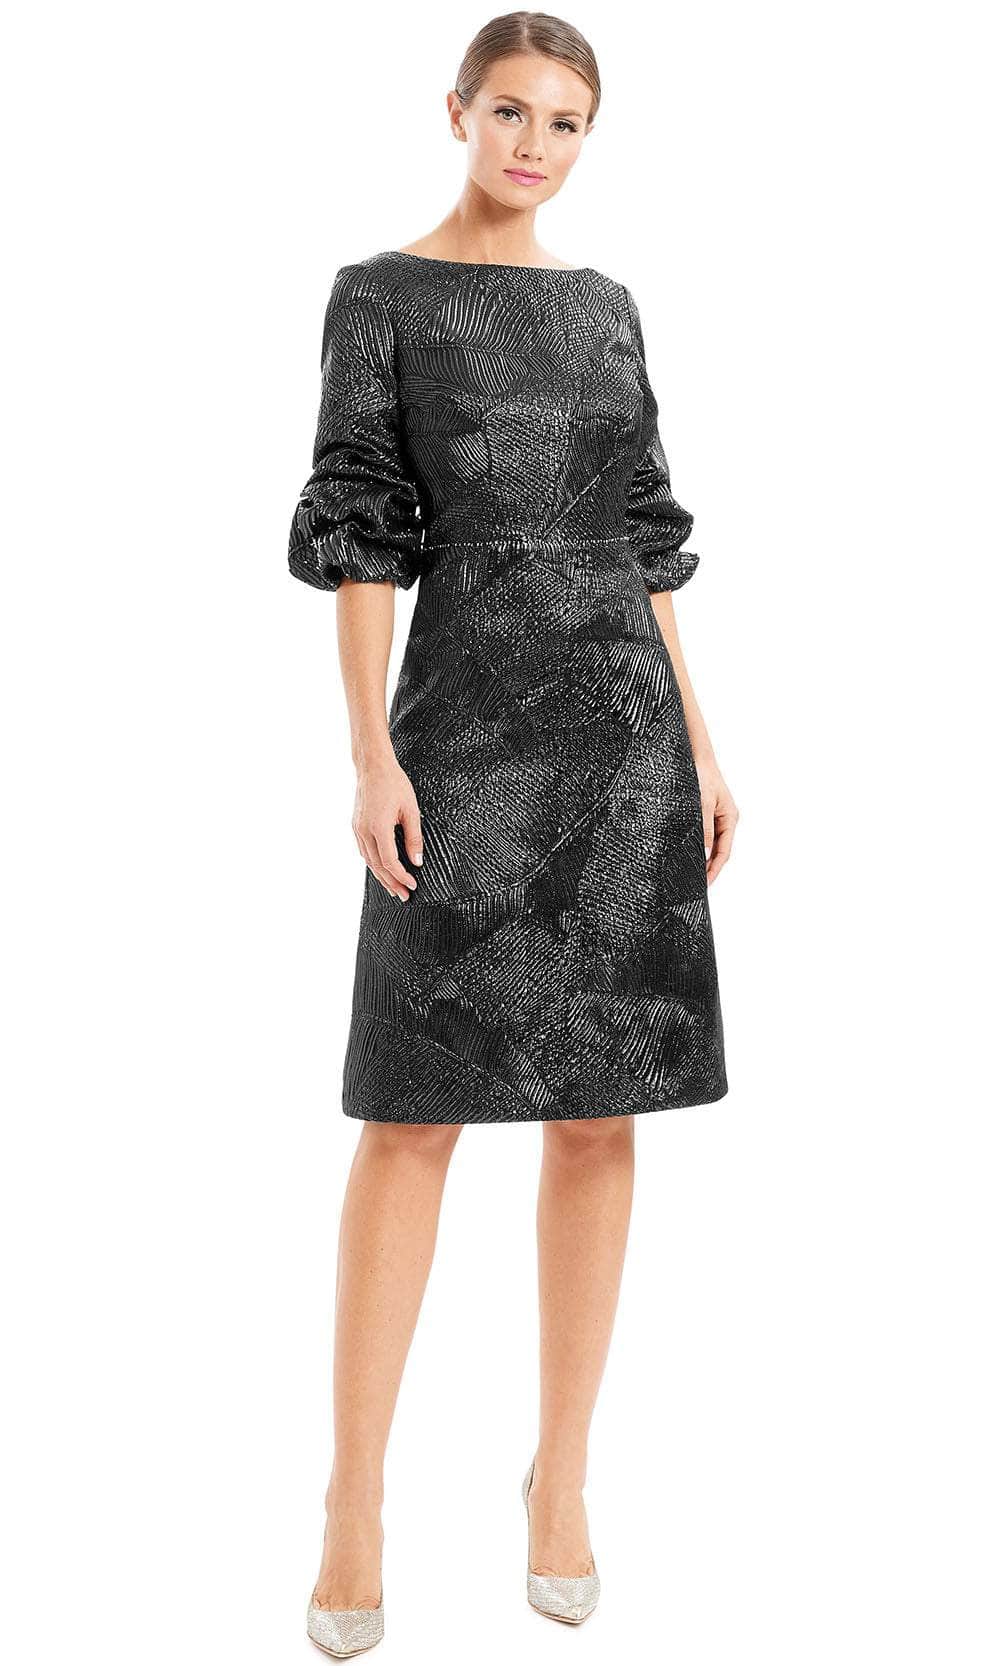 Alexander By Daymor 1654F22 - Ruffled Quarter Sleeve Formal Dress Special Occasion Dress 4 / Black